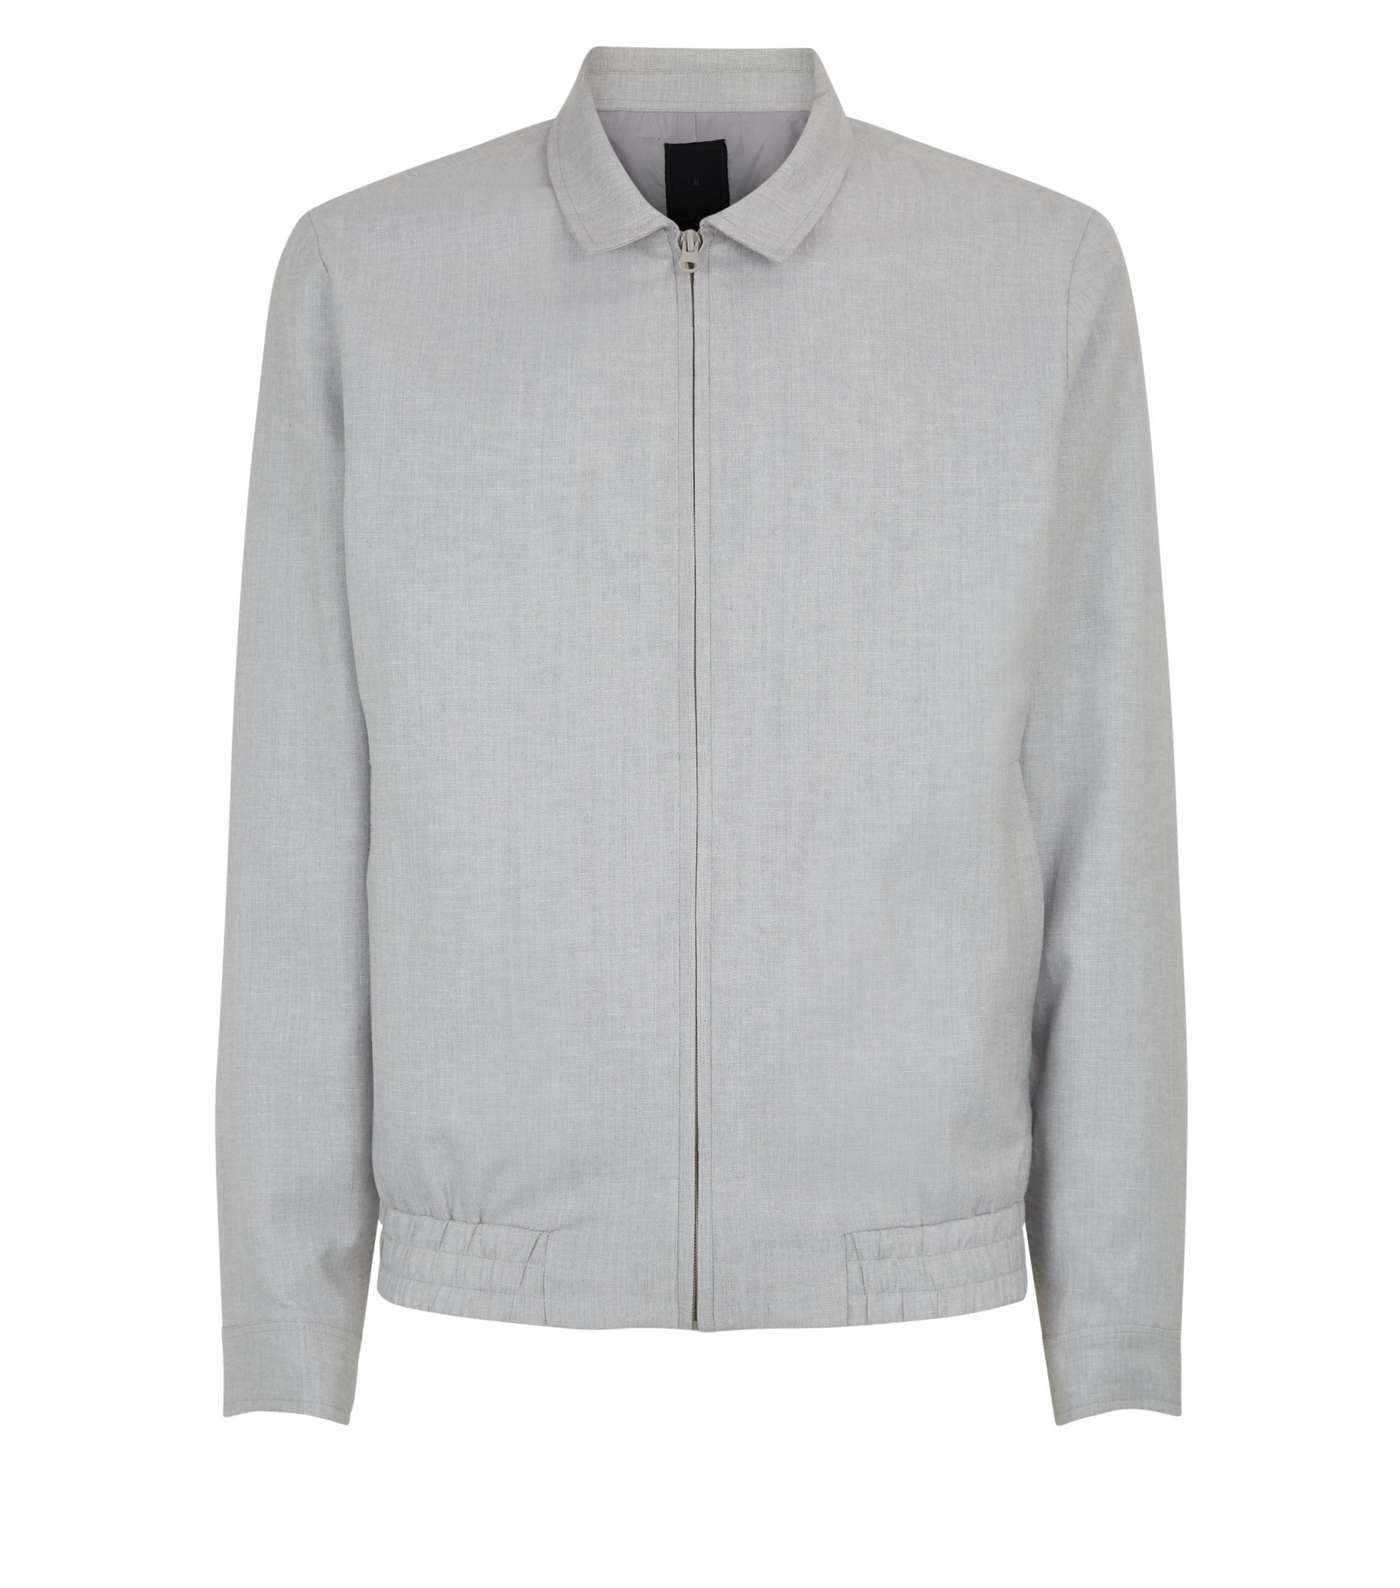 Pale Grey Zip Up Lightweight Jacket